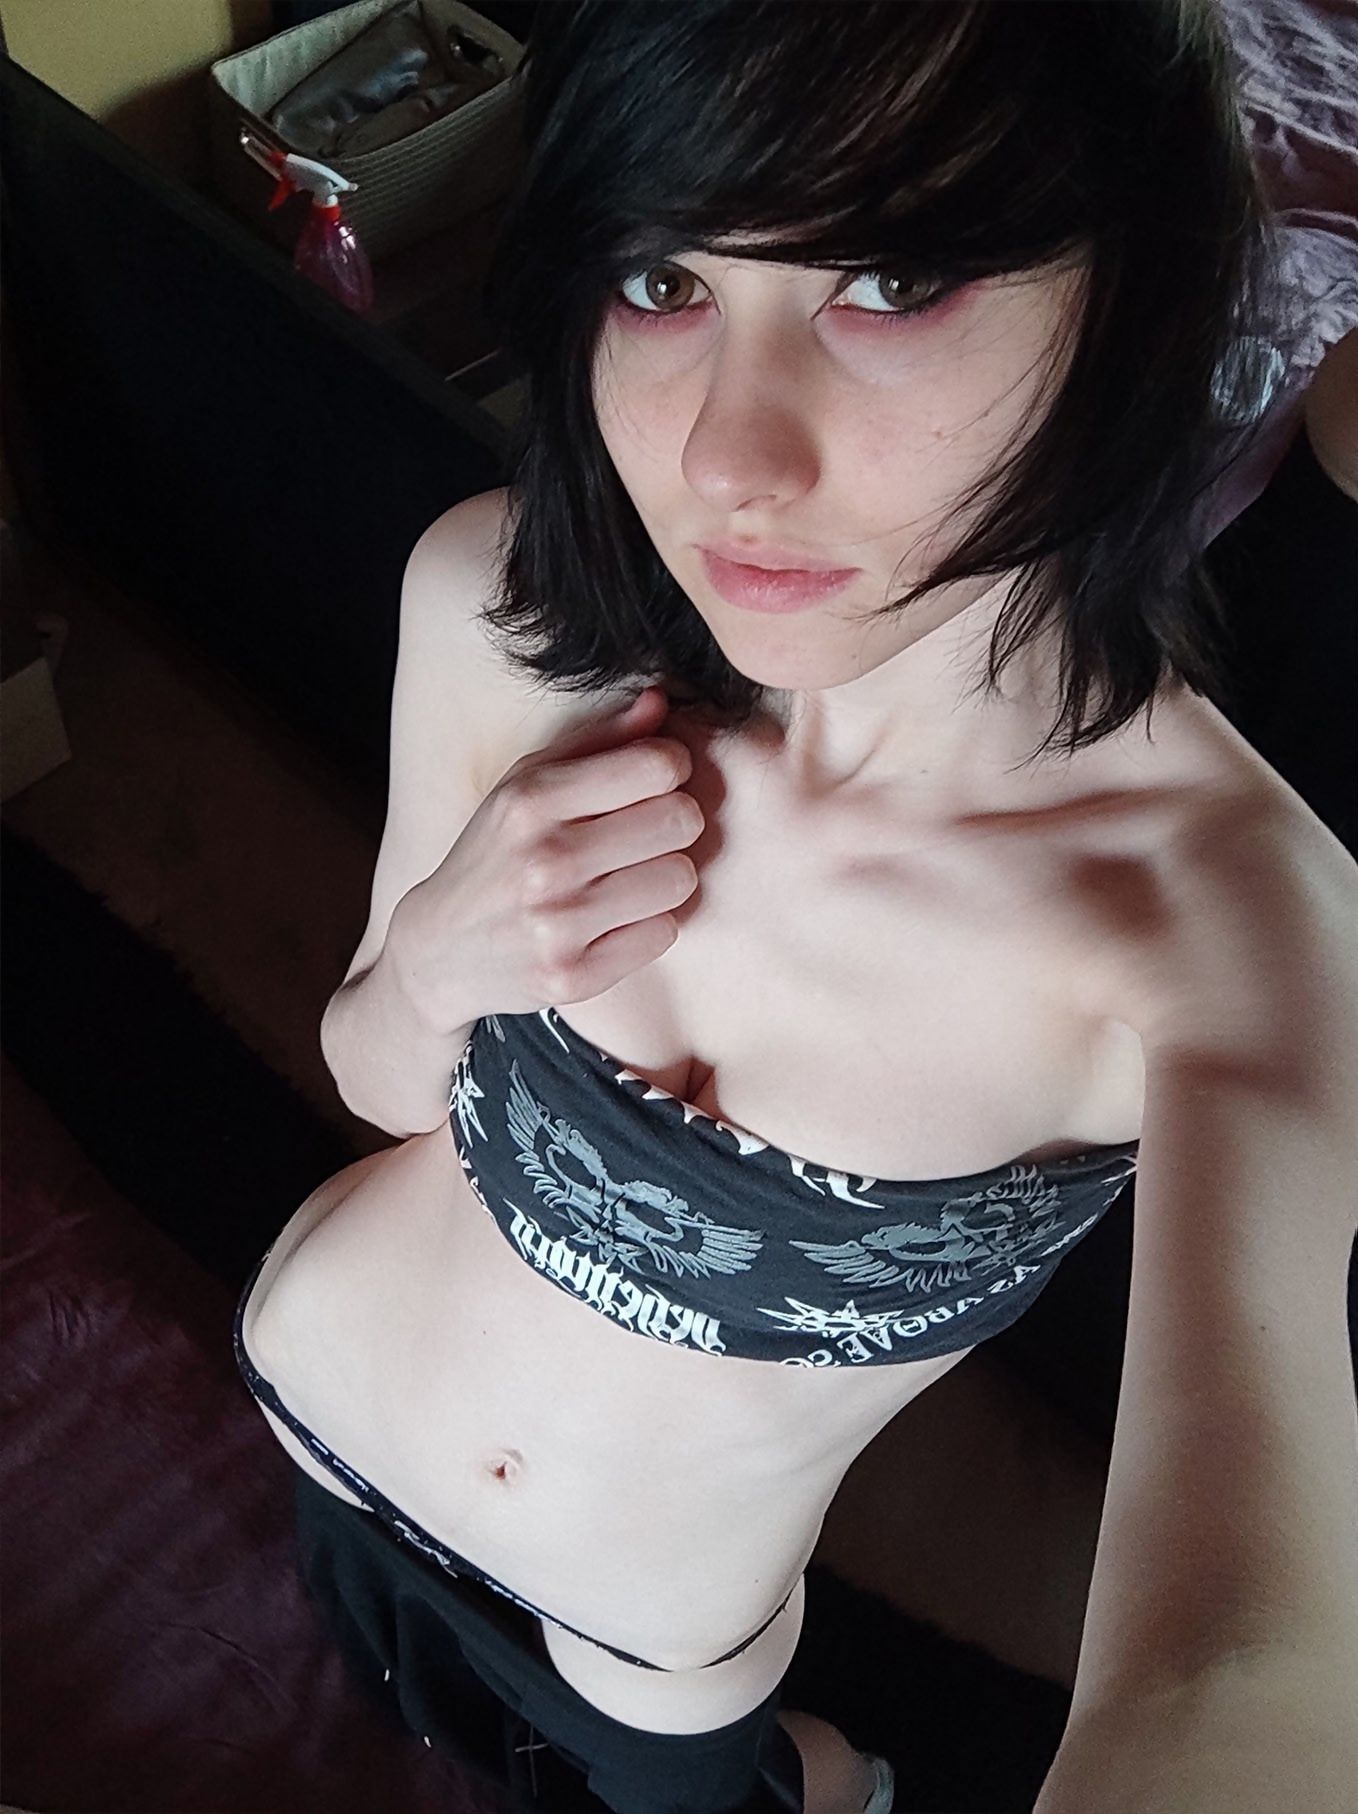 barbara runion share skinny pale girl nude photos